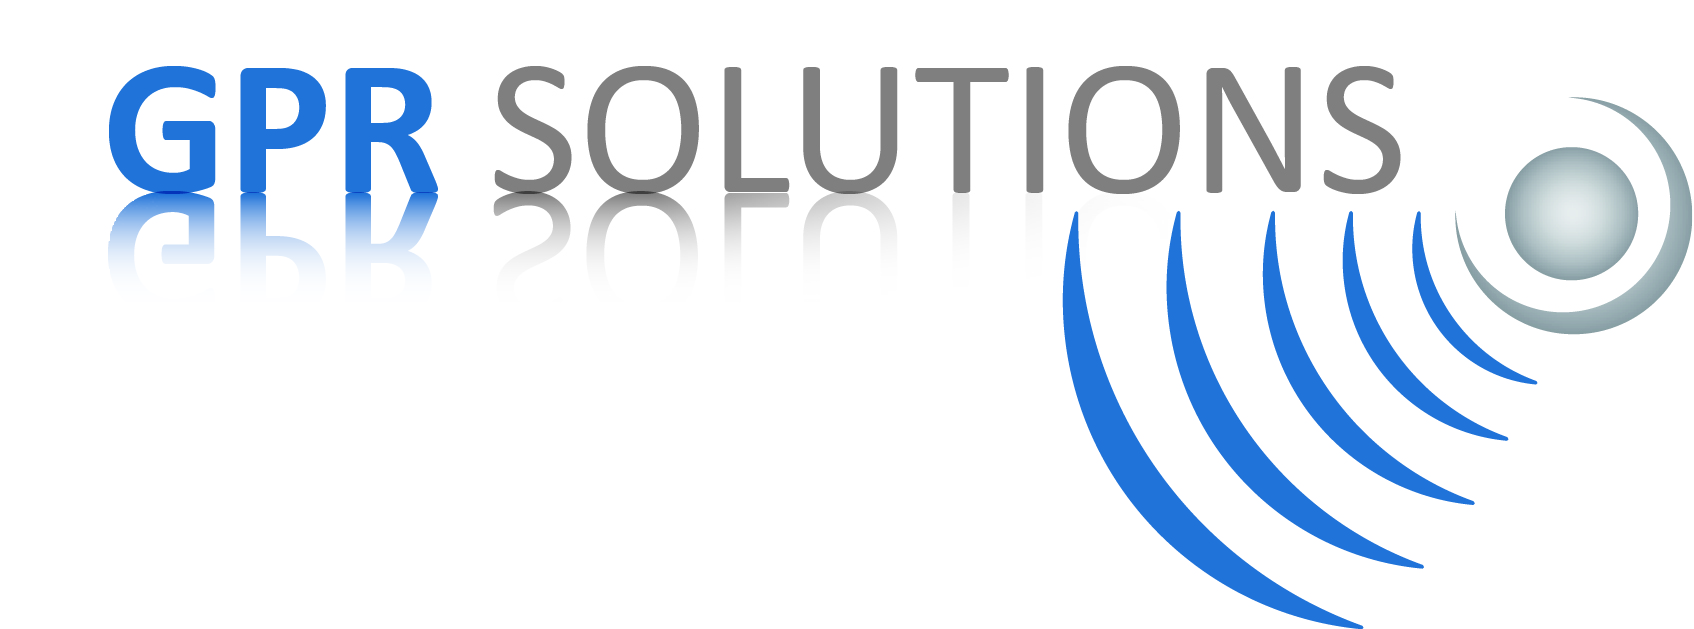 108983161 gpr solutions rgb